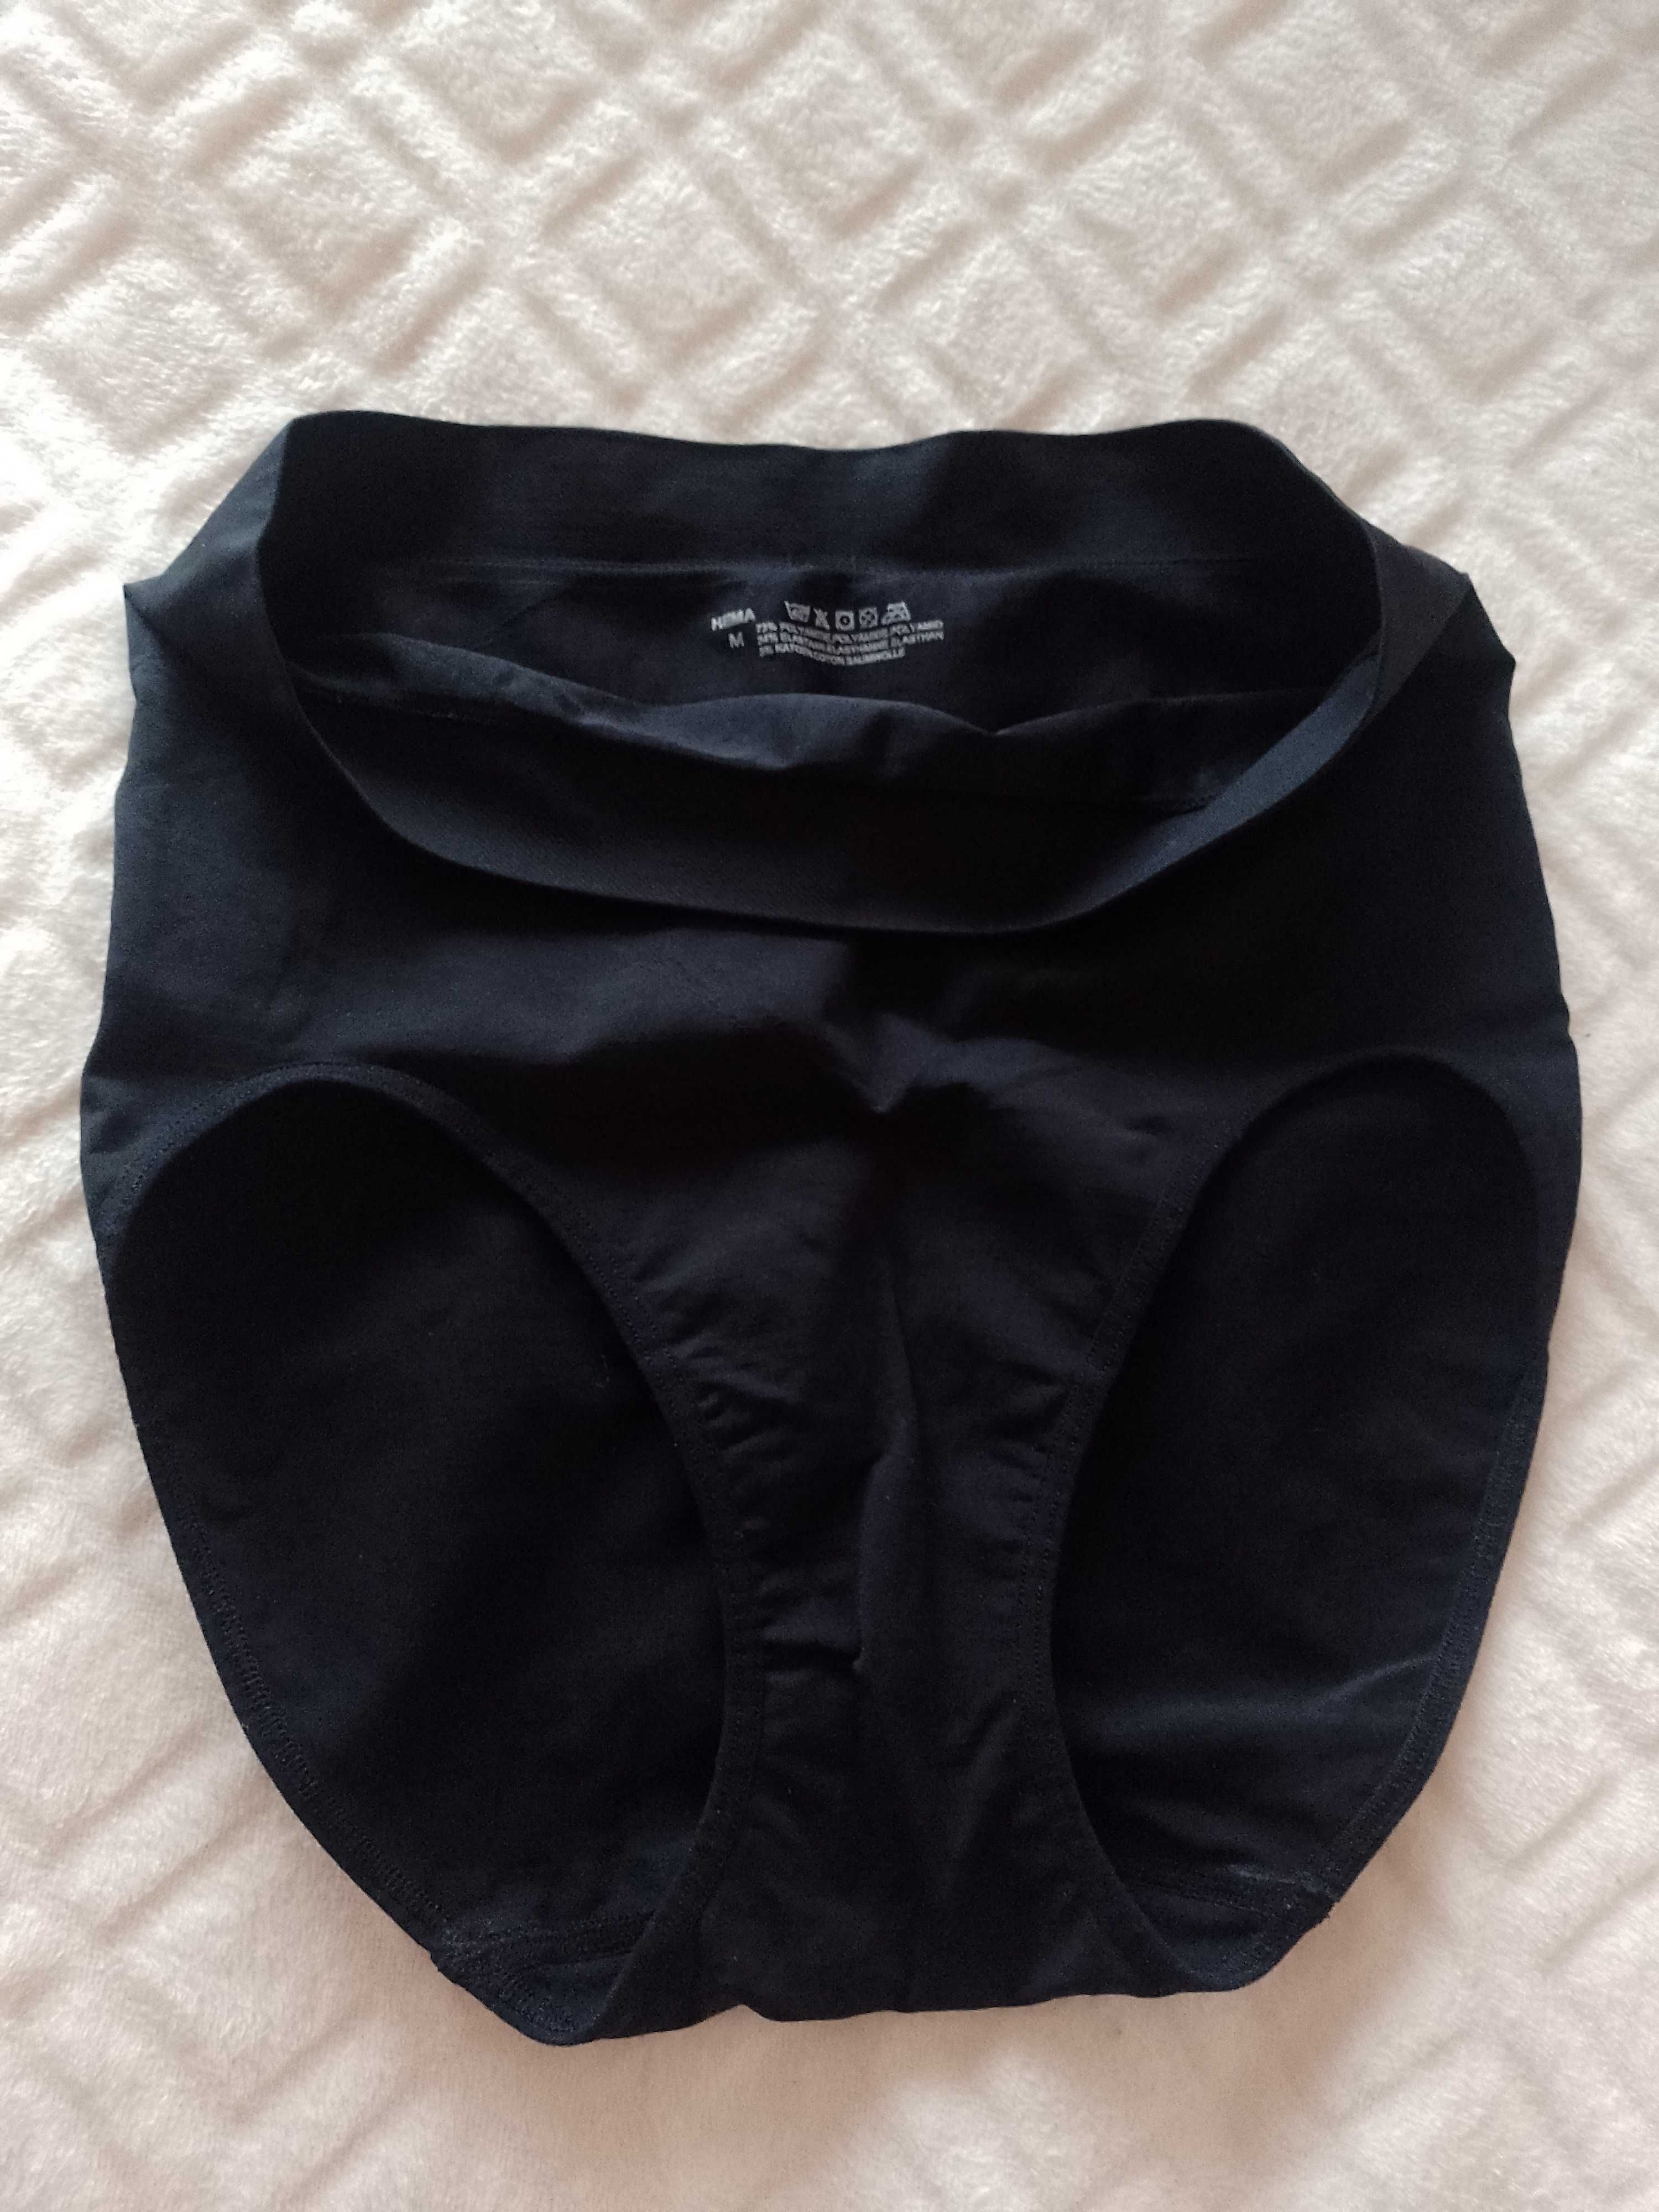 (38/M) HEMA/ Ekskluzywne, czarne majtki modelujące z Londynu